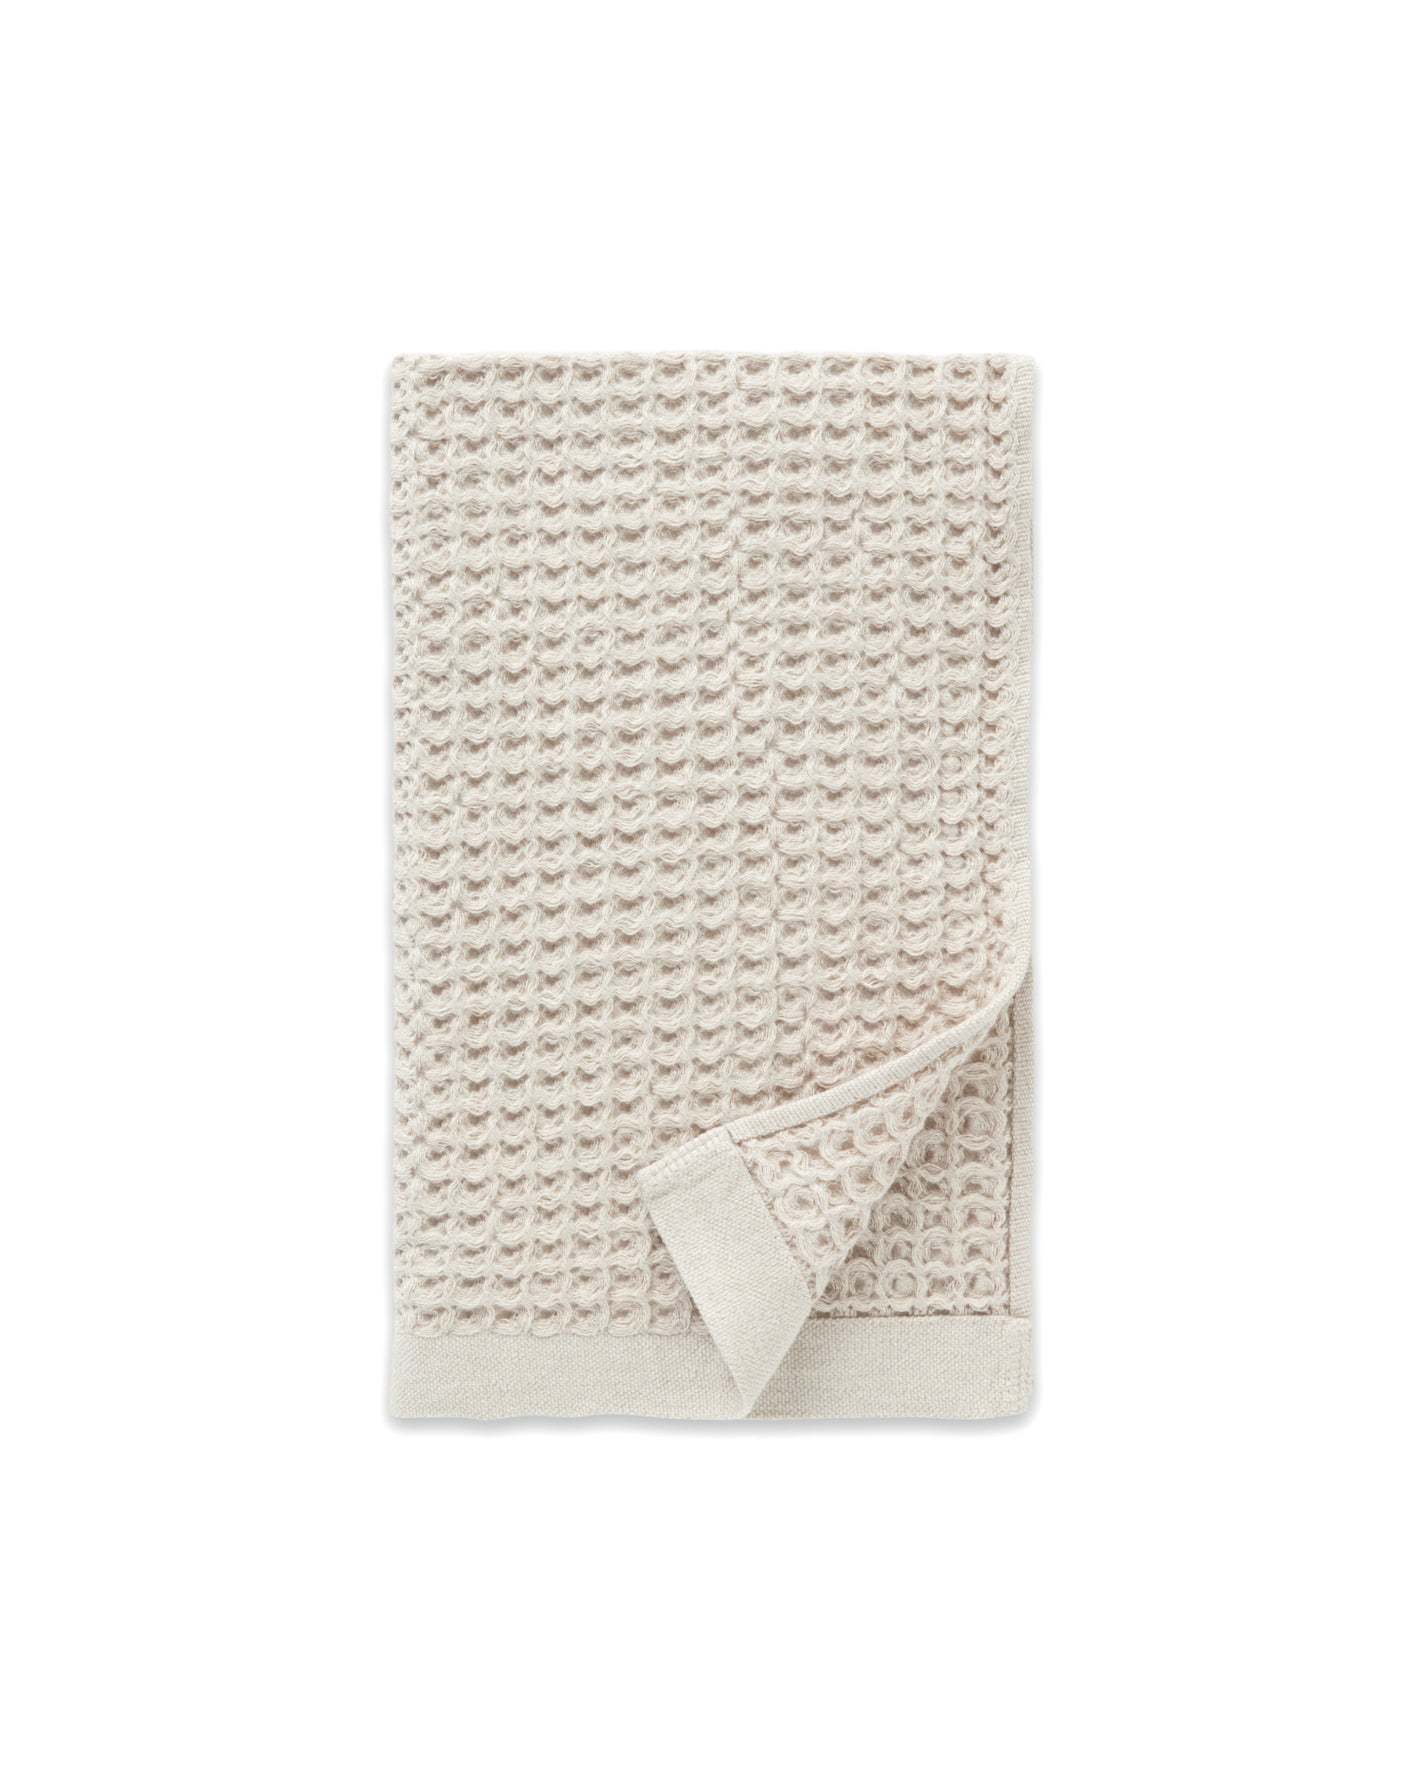 ONSEN Face Towel - Waffle Weave 100% Supima Cotton Towel